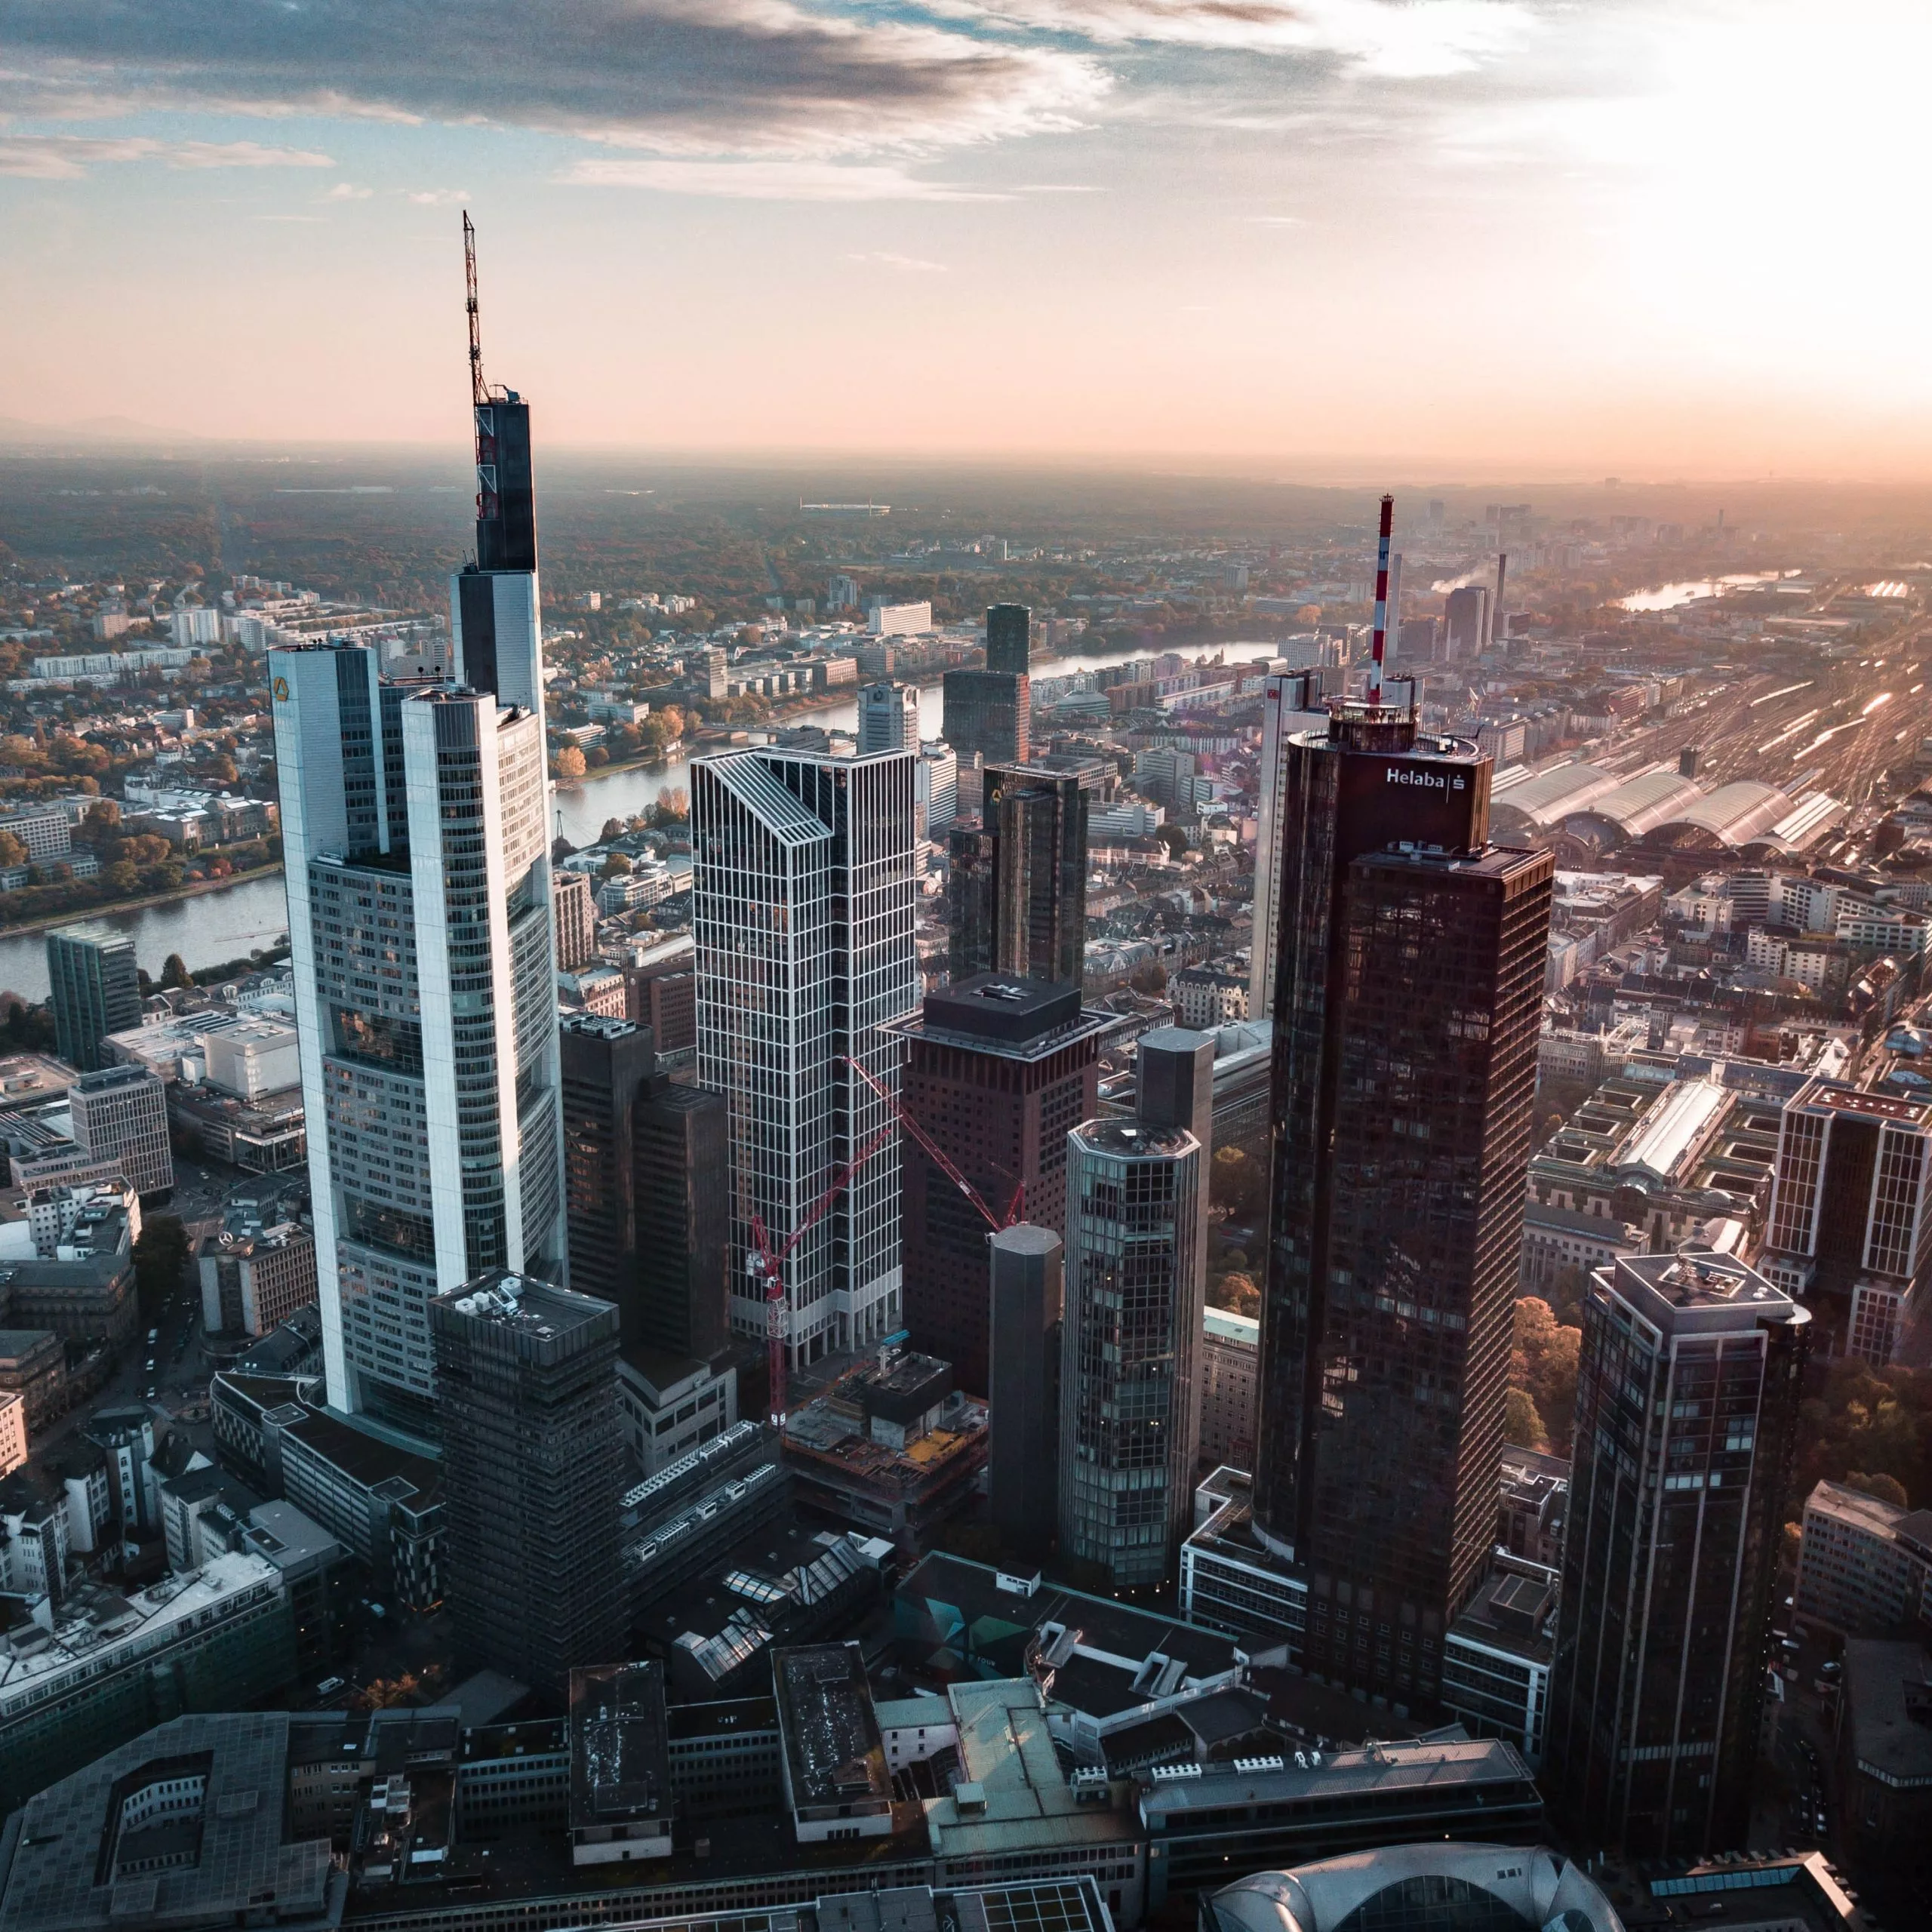 Frankfurt- A Major Financial Hub